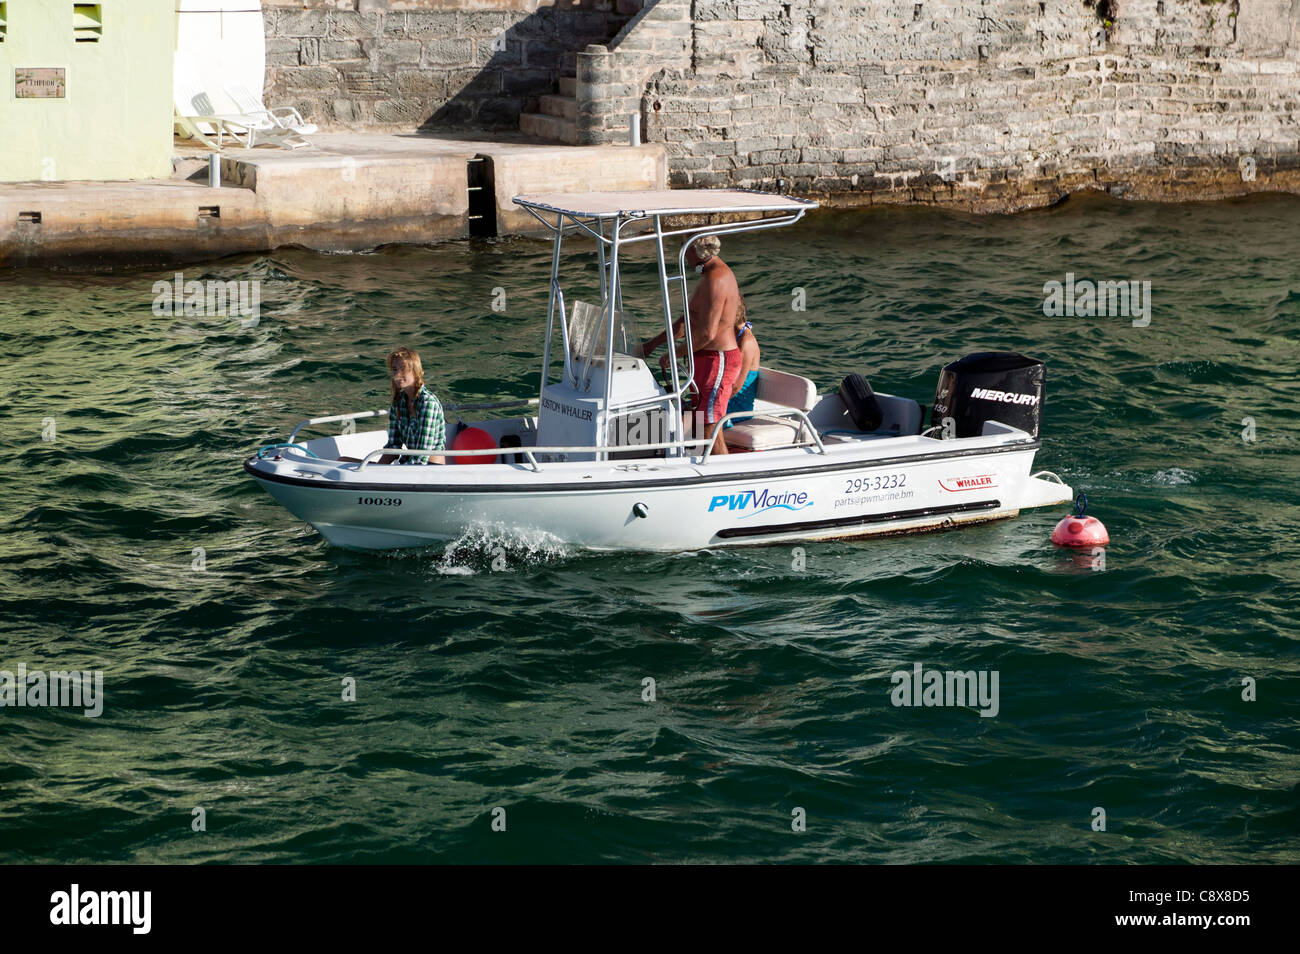 13ft Boston Whaler  motor boat  near Darrells Wharf, Warwick Parish, Bermuda Stock Photo